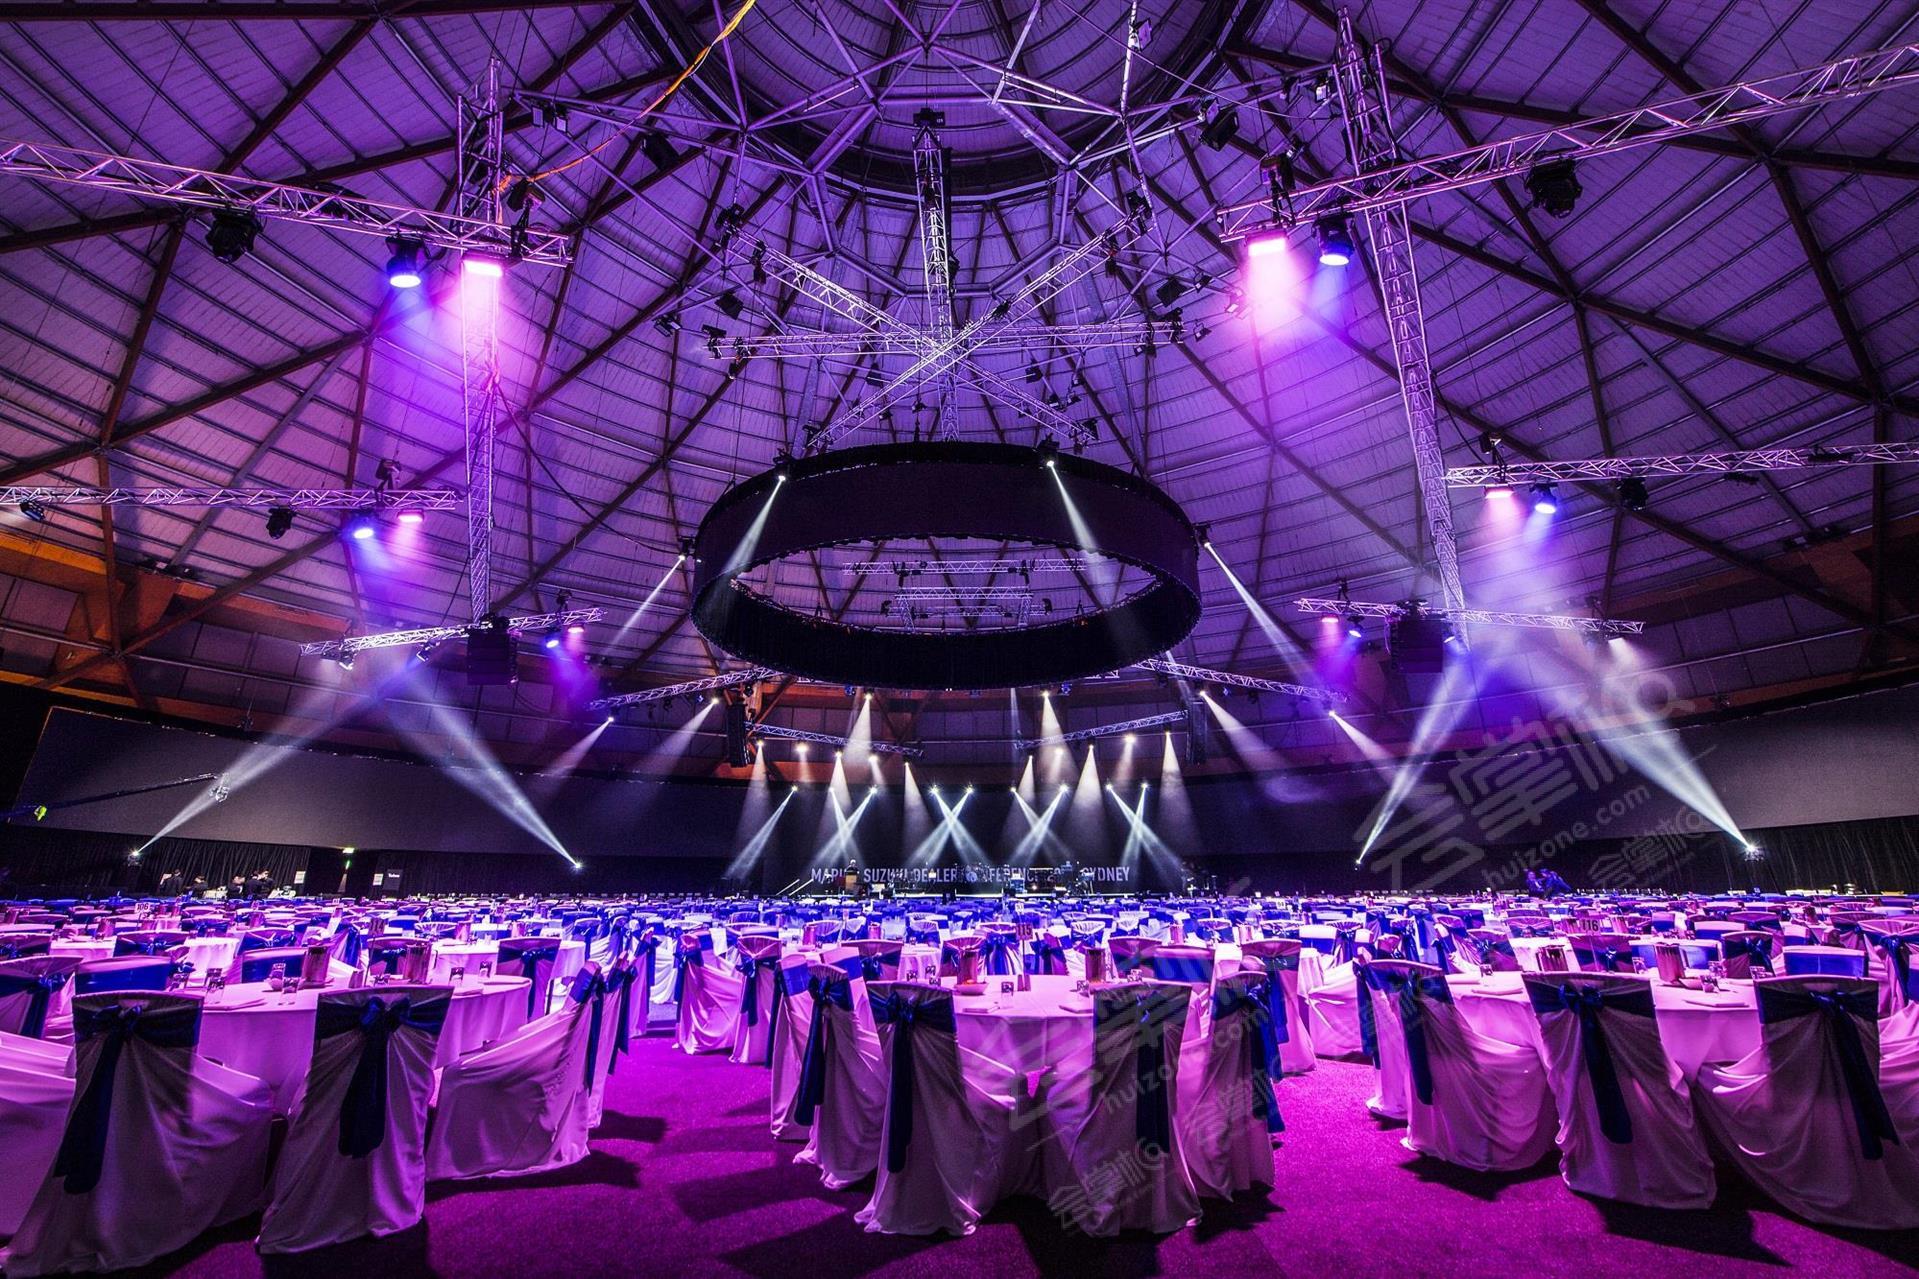 Sydney Showground - The Dome